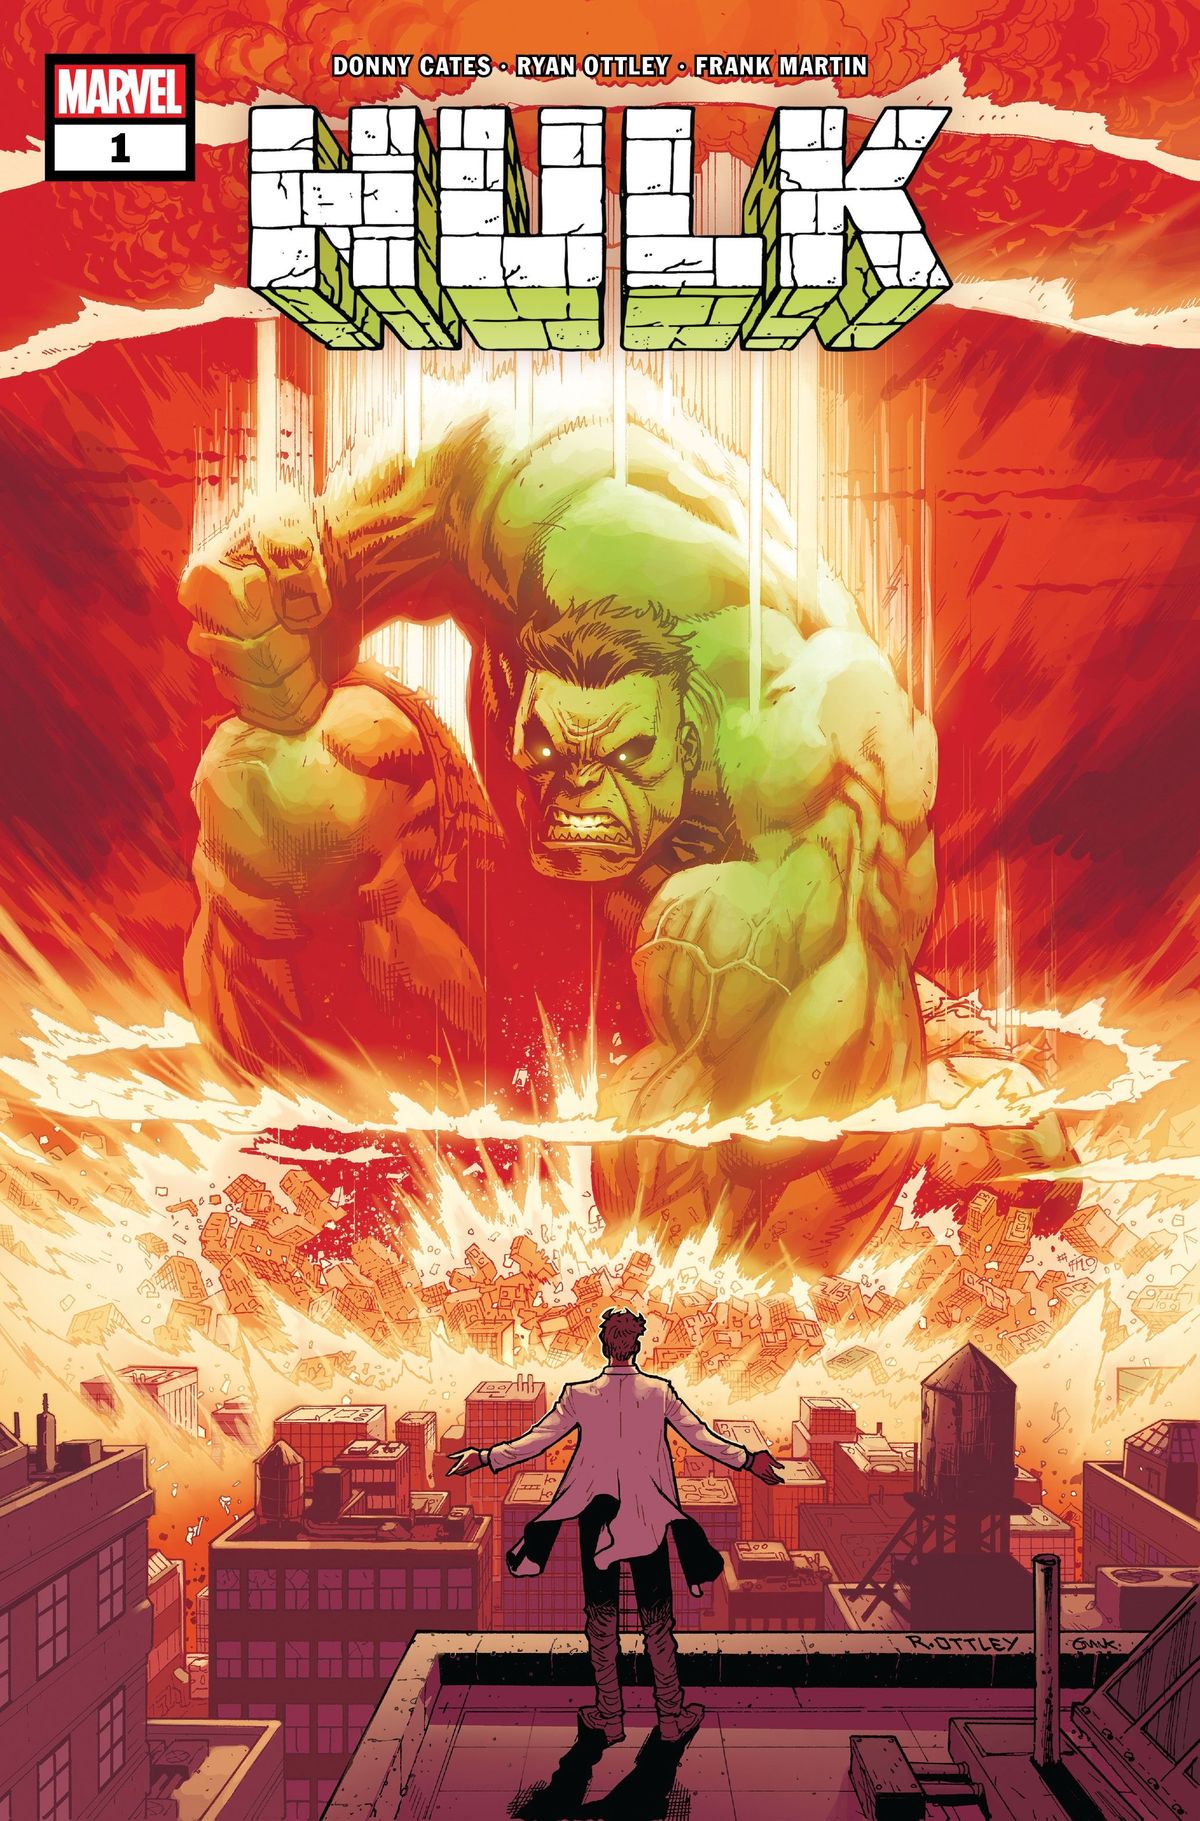 The Hulk: Cates & Ottley Are Marvel's Post-Immortal Creative Team